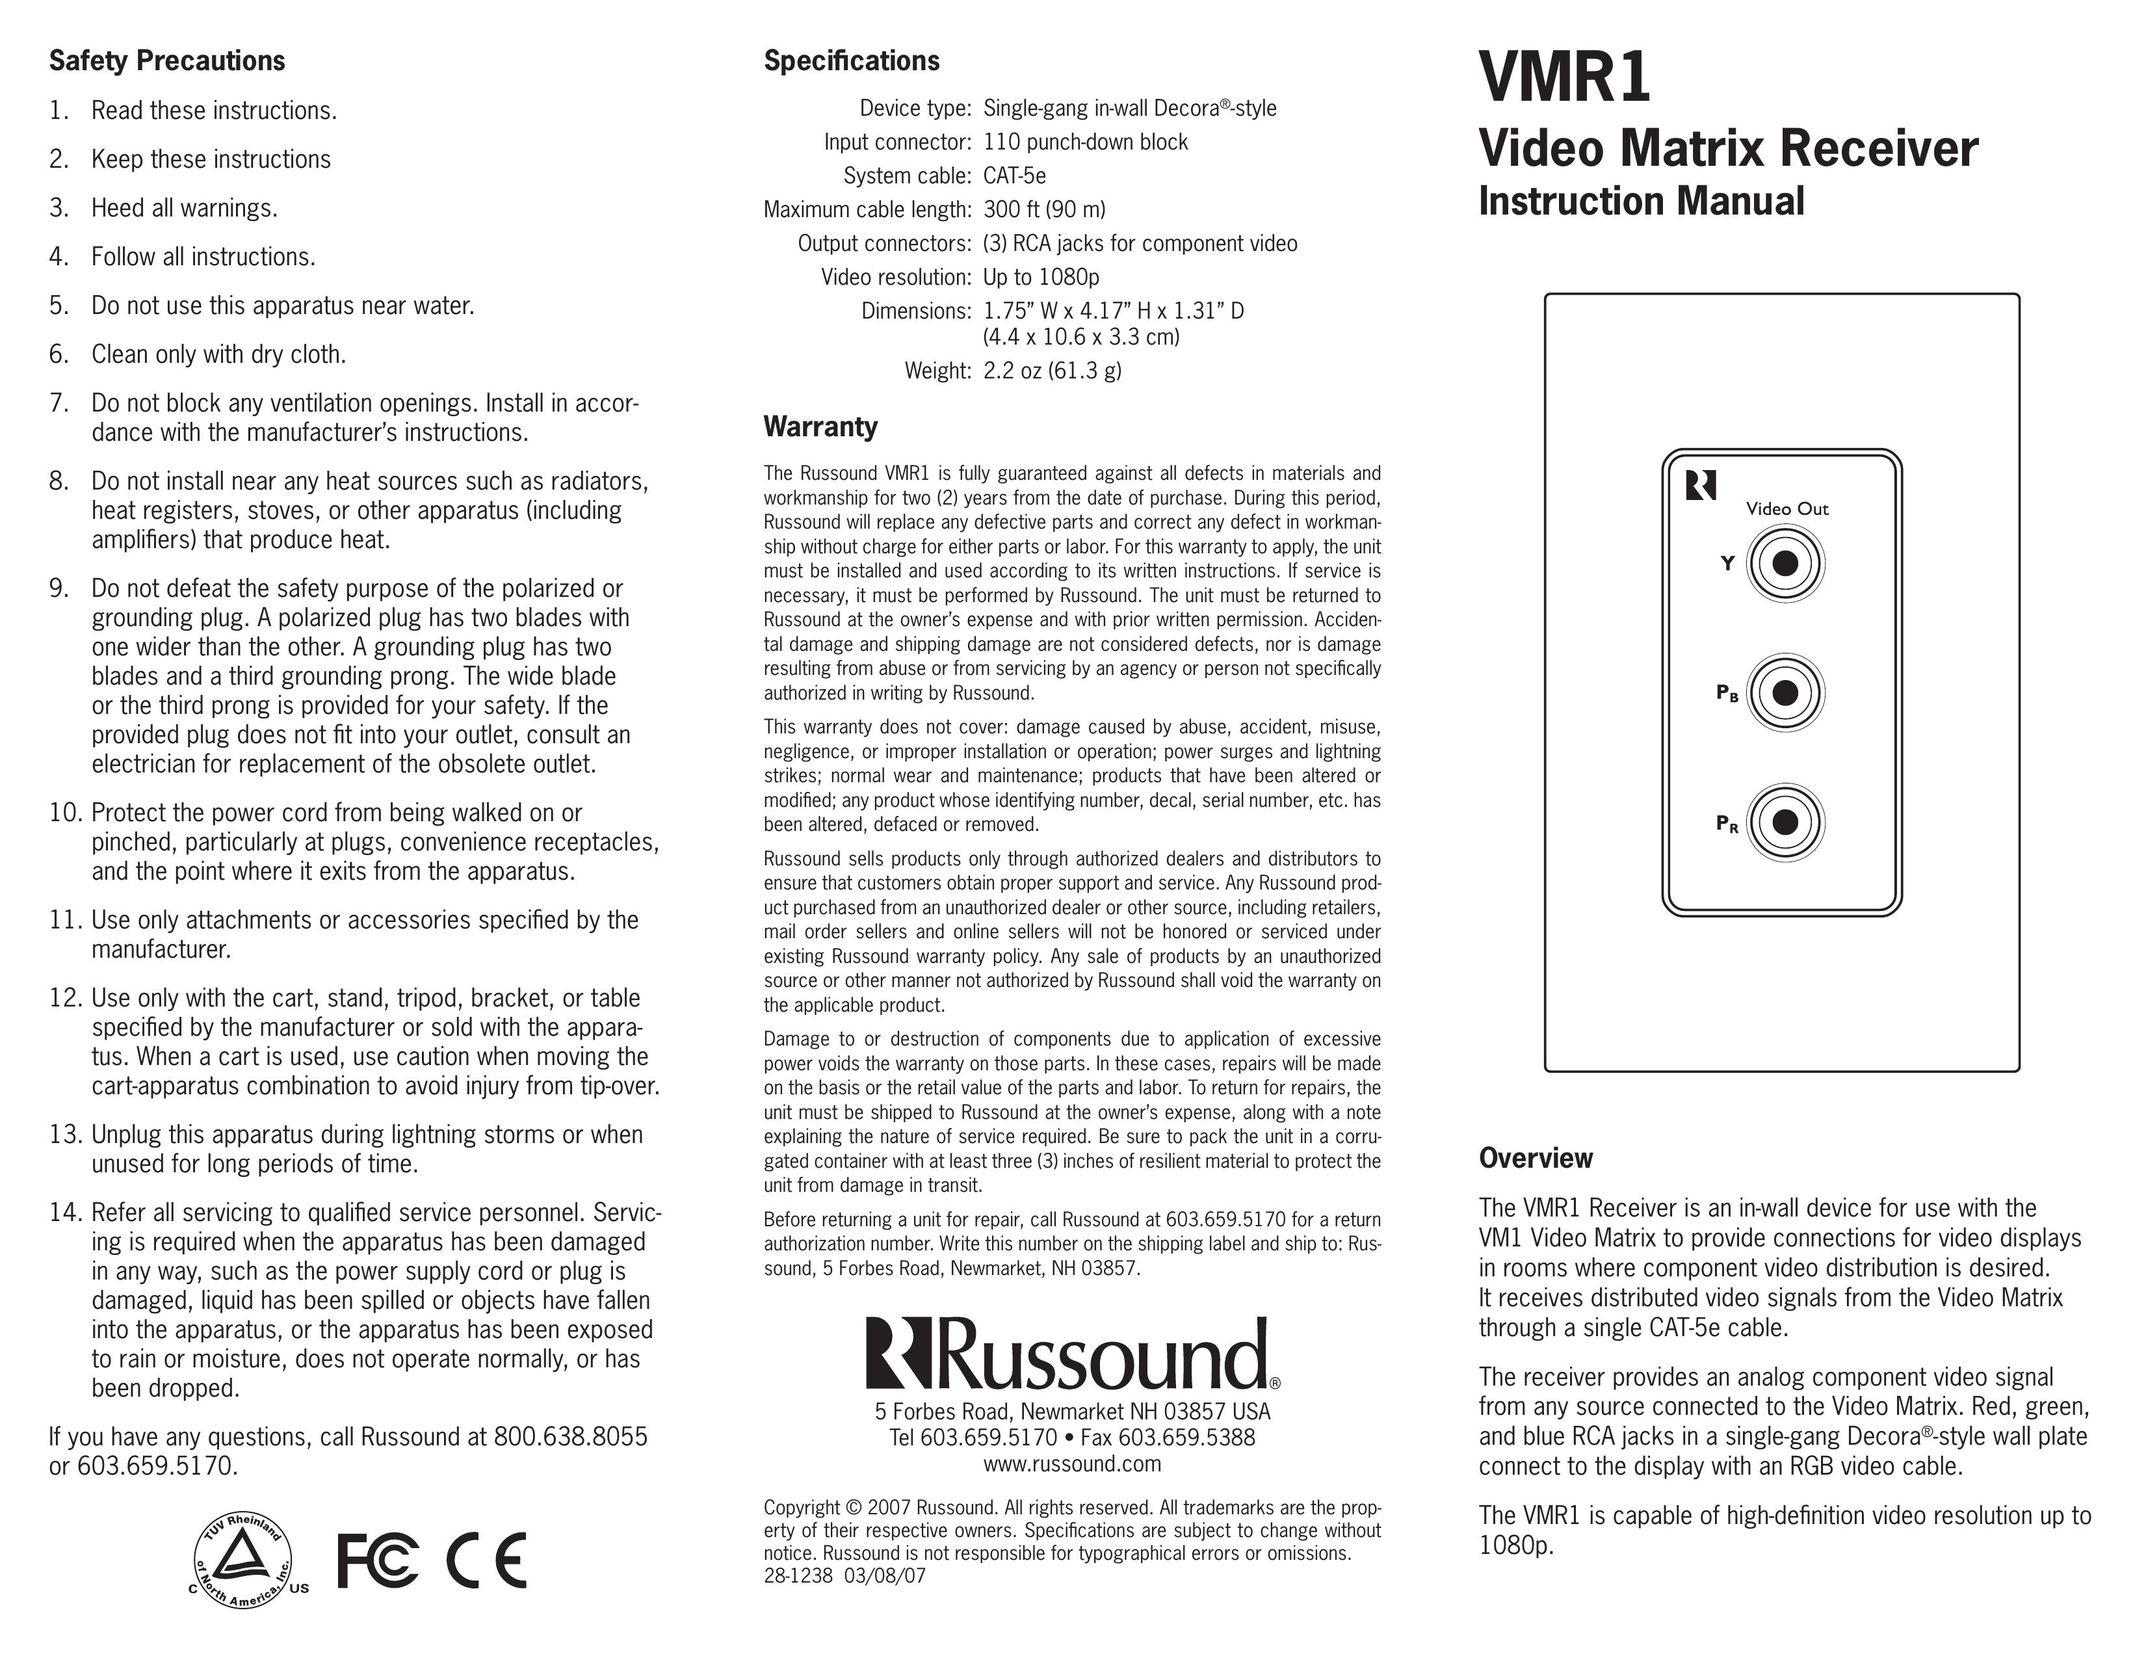 Russound VMR1 Car Video System User Manual